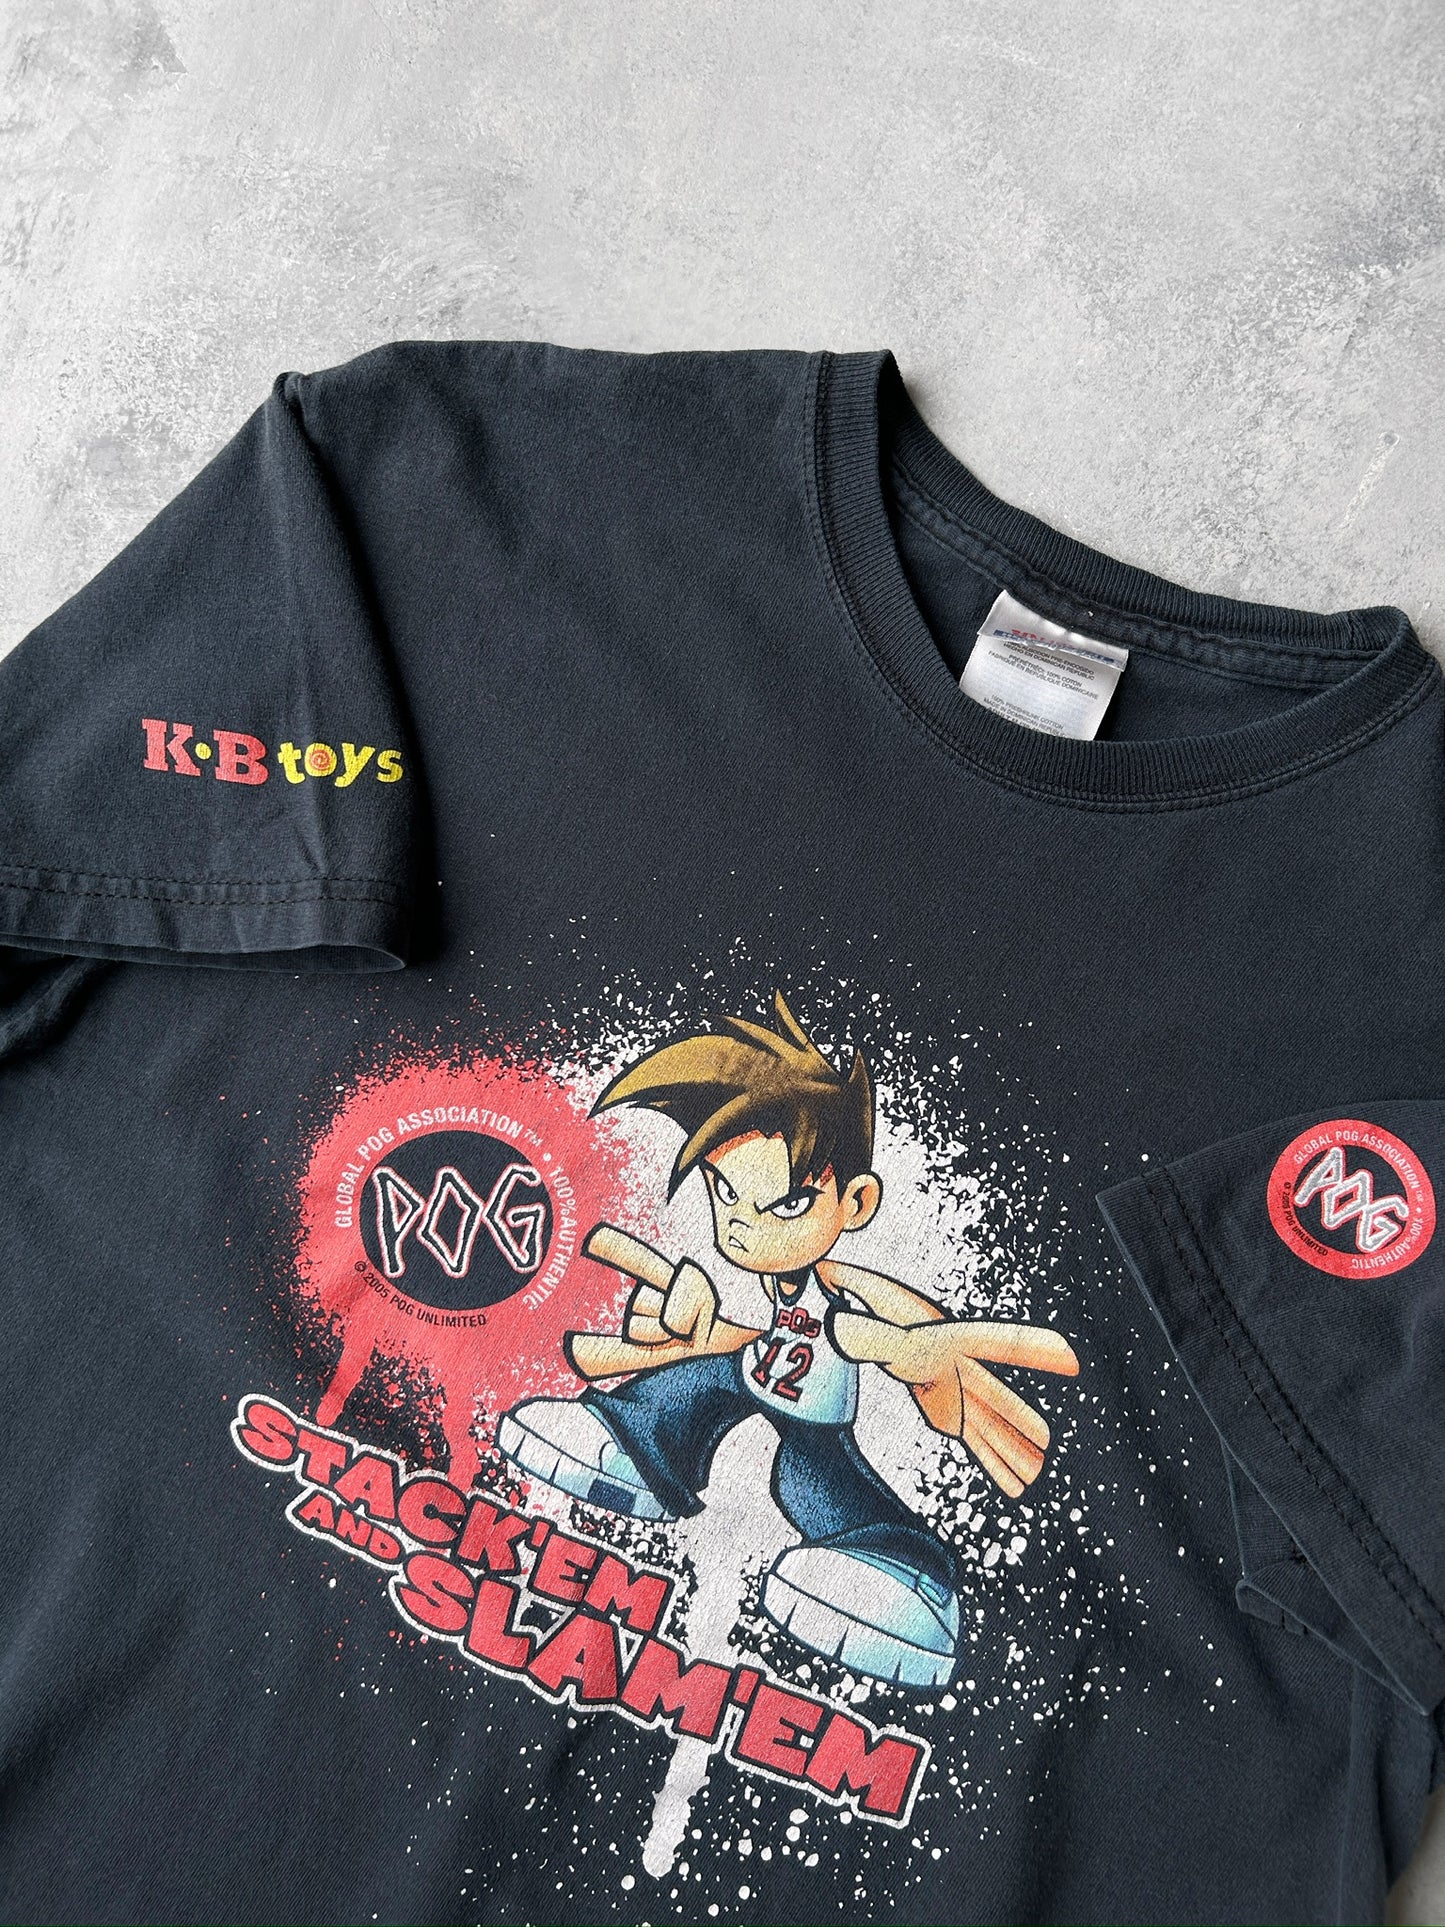 POGs T-Shirt '05 -  Medium